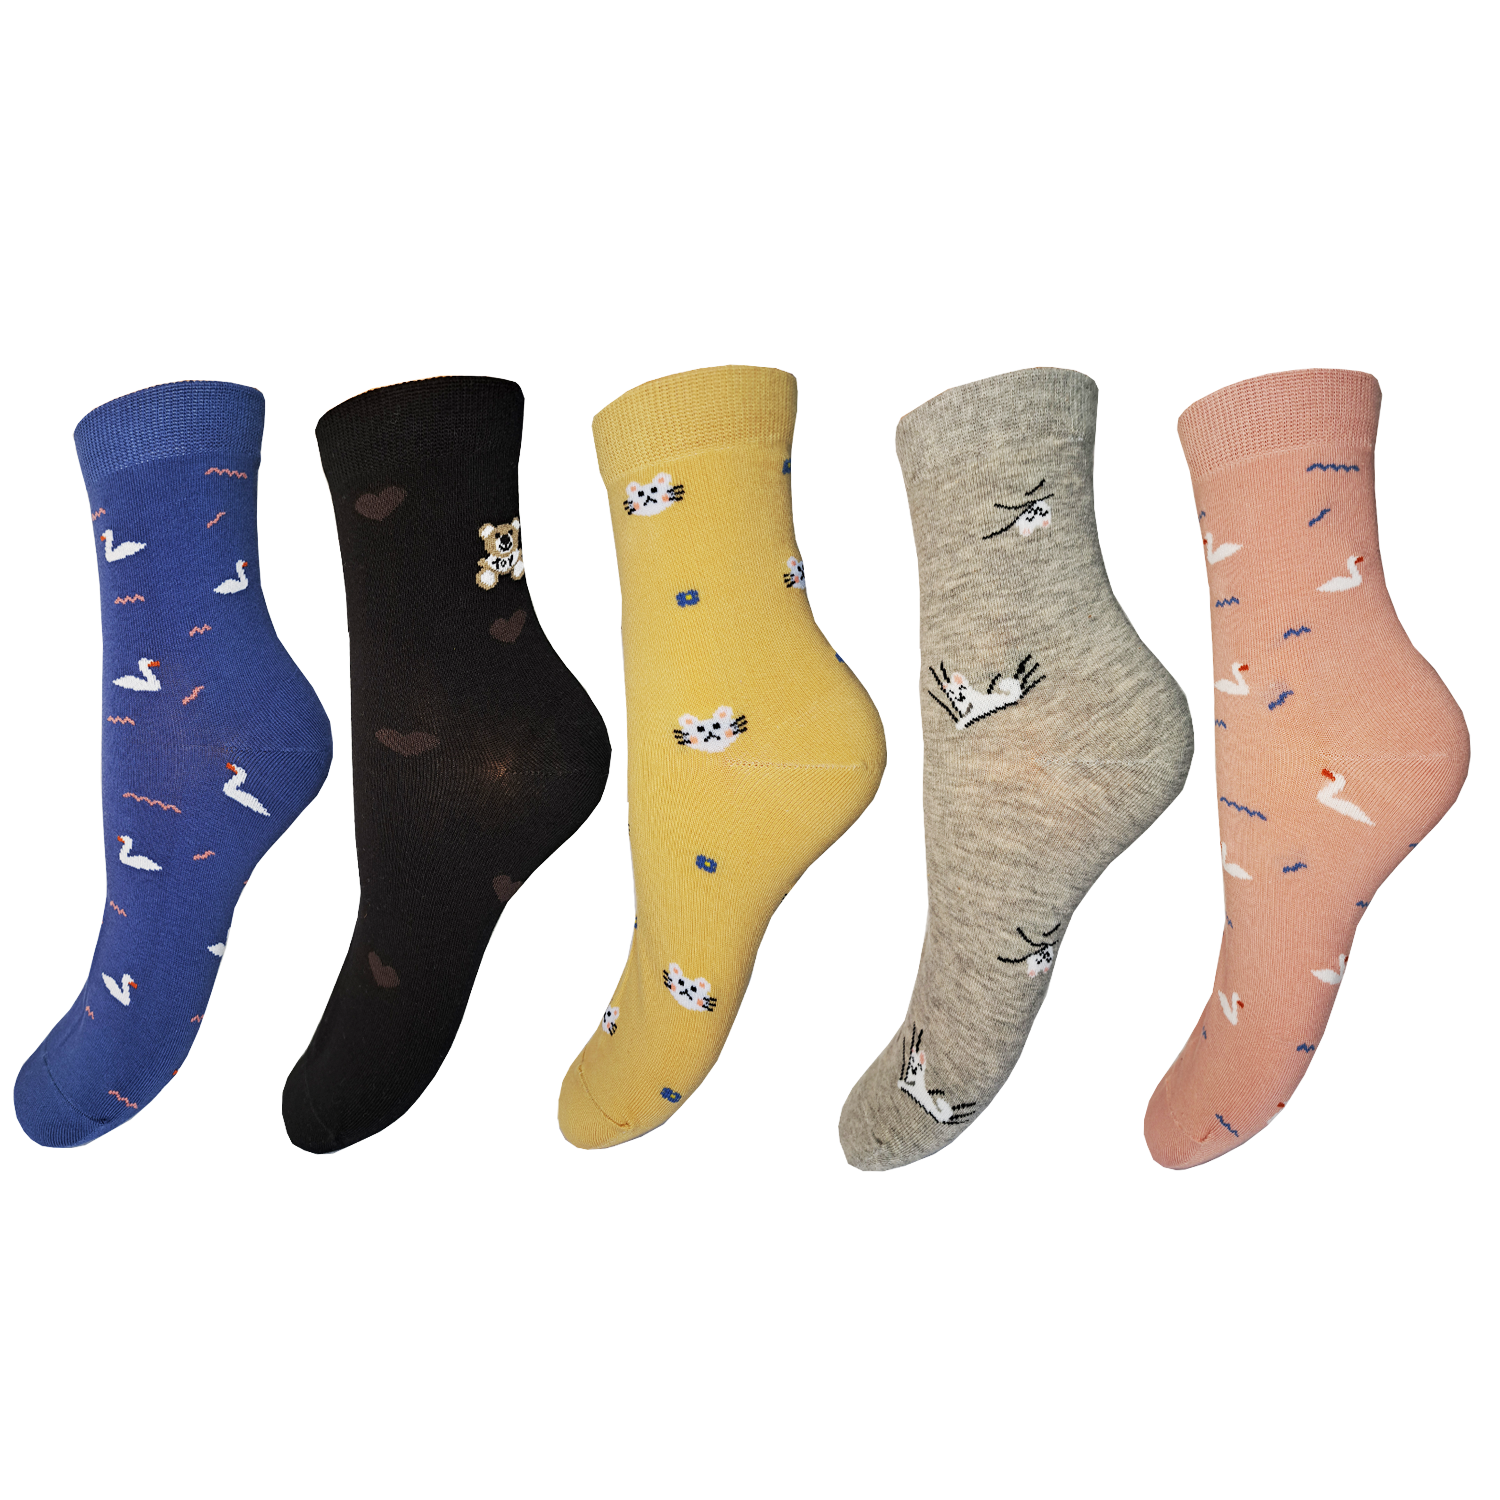 Dámské ponožky Aura.Via - NZP8115, mix barev Barva: Mix barev, Velikost: 38-41